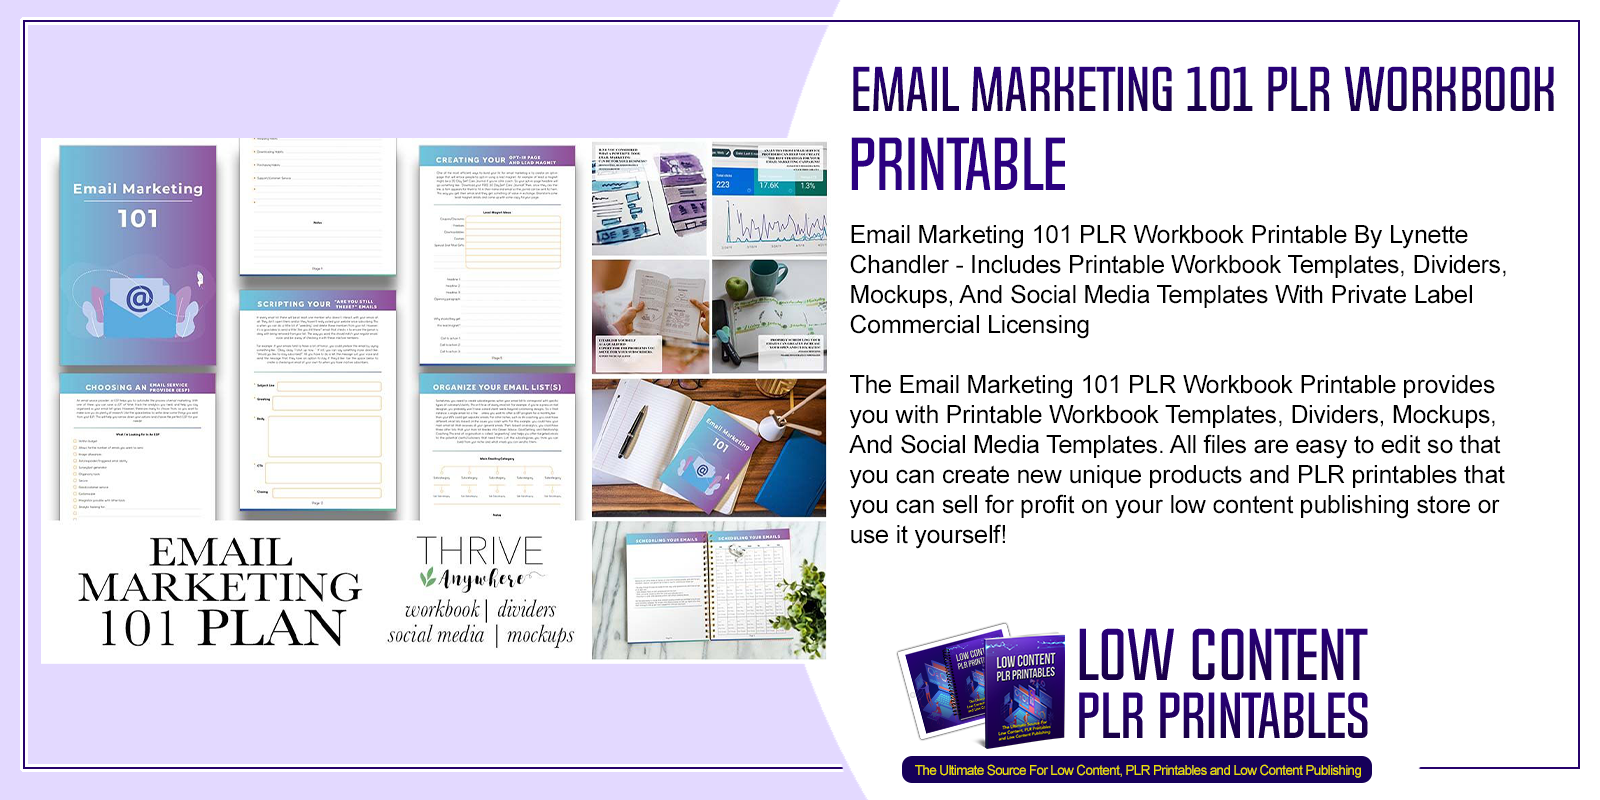 Email Marketing 101 PLR Workbook Printable